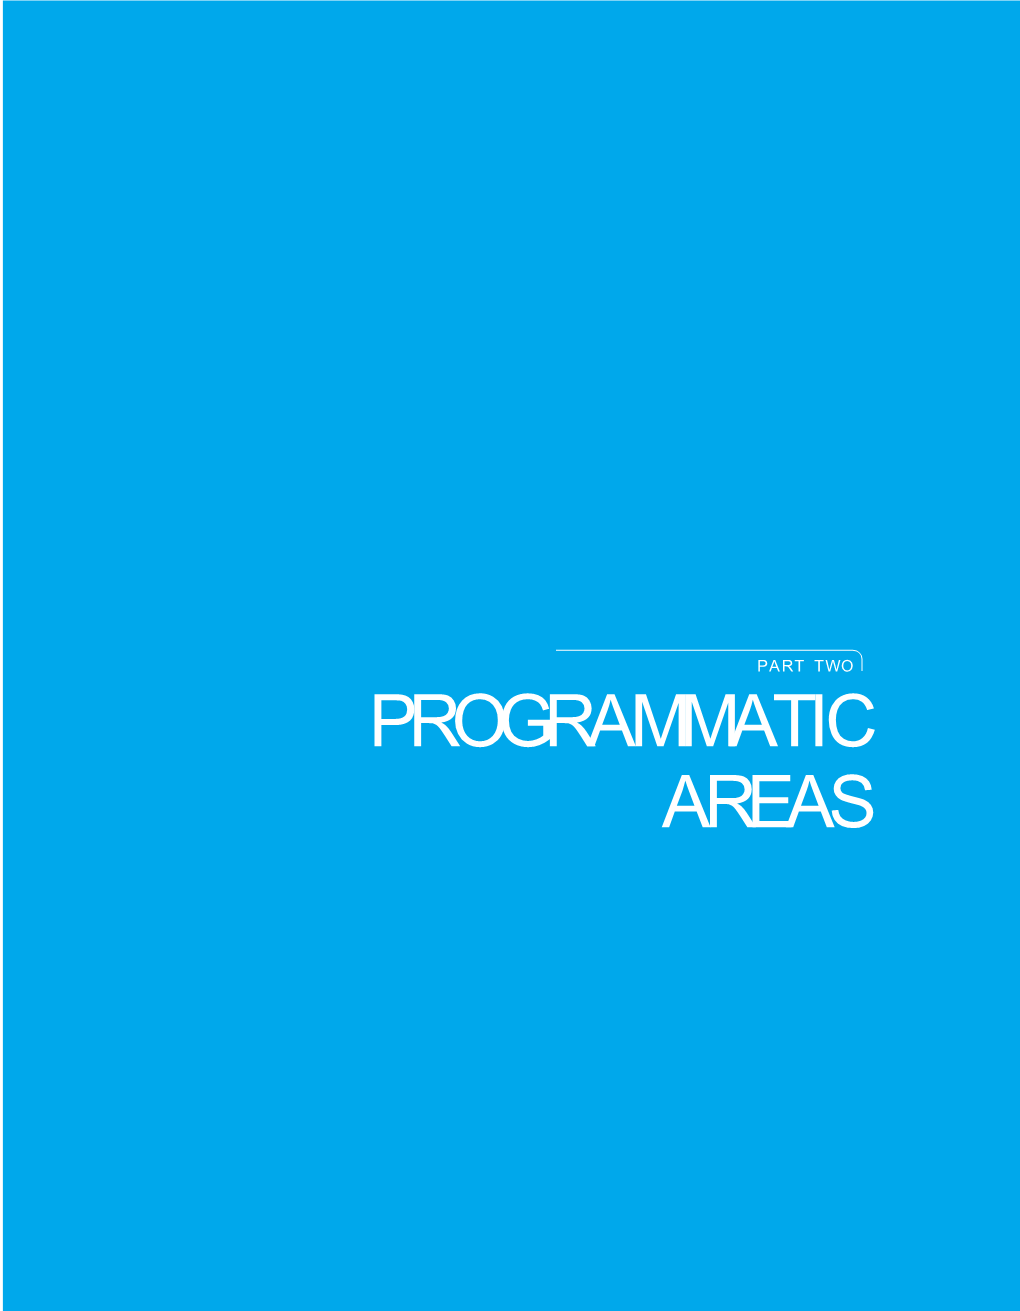 Programmatic Areas